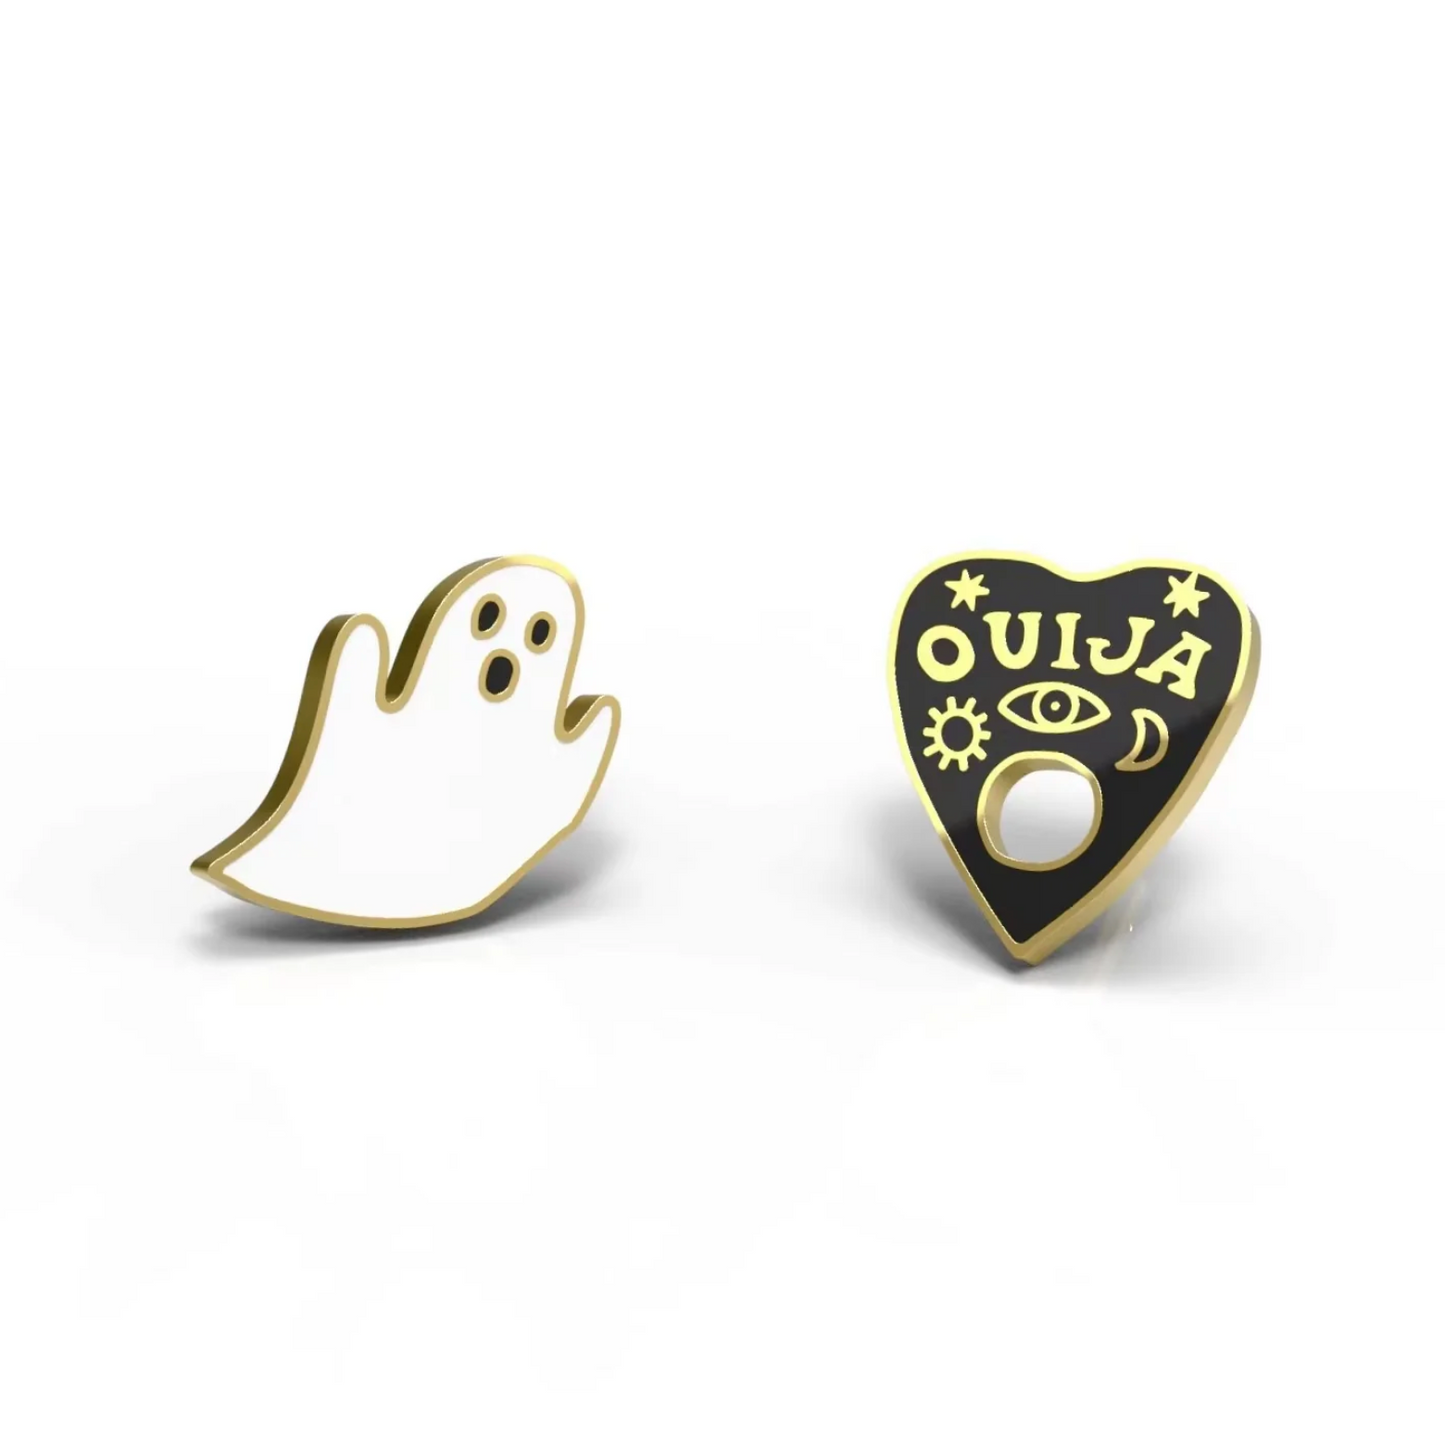 Ghost & Quija Earring